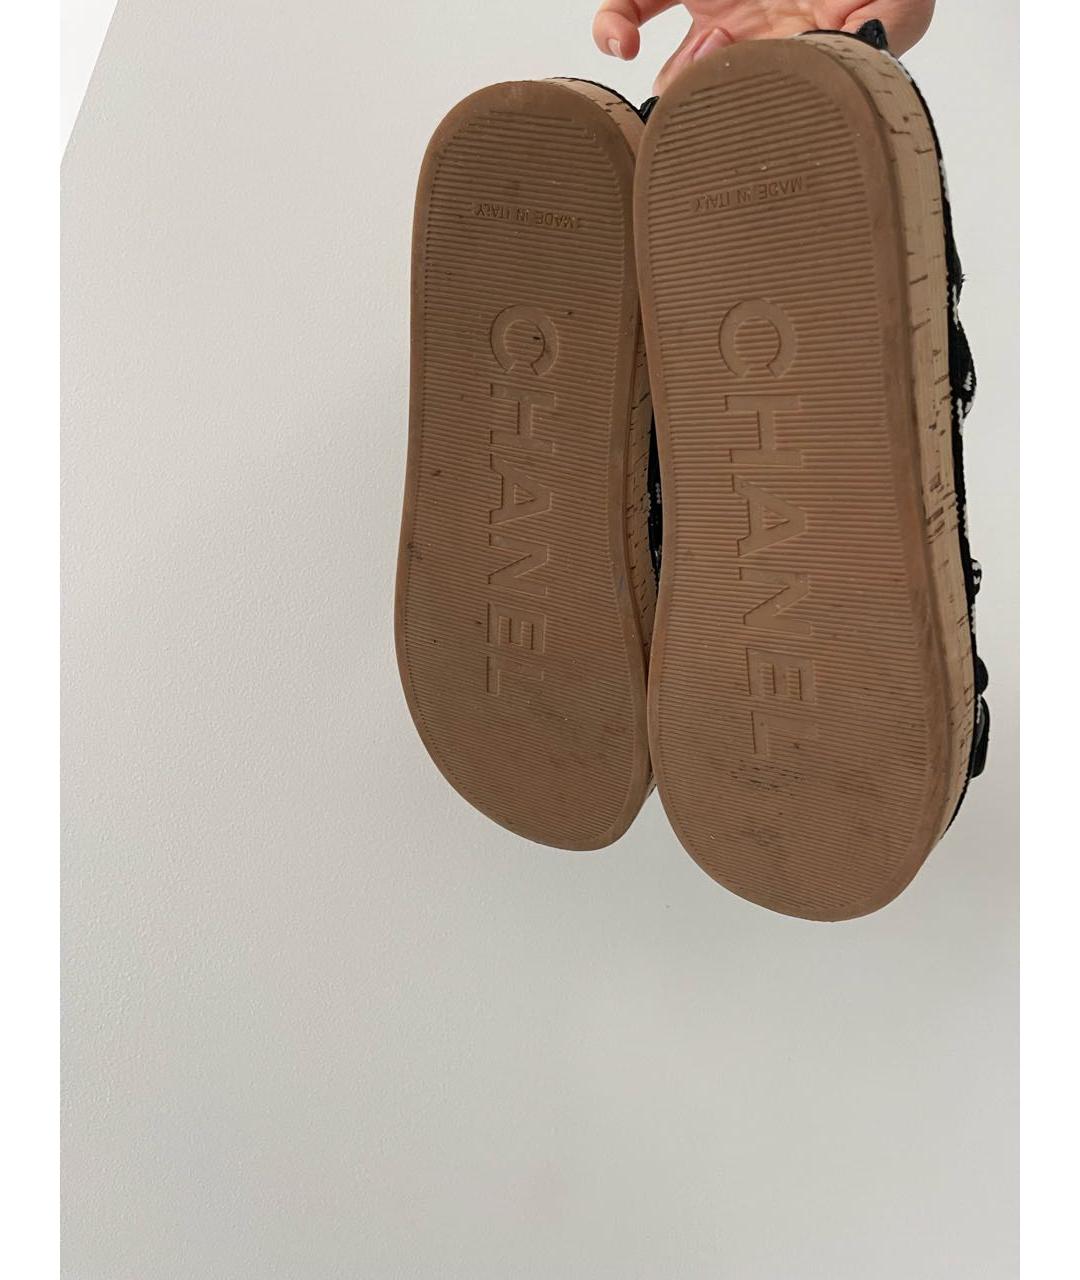 CHANEL PRE-OWNED Черные кожаные сандалии, фото 4